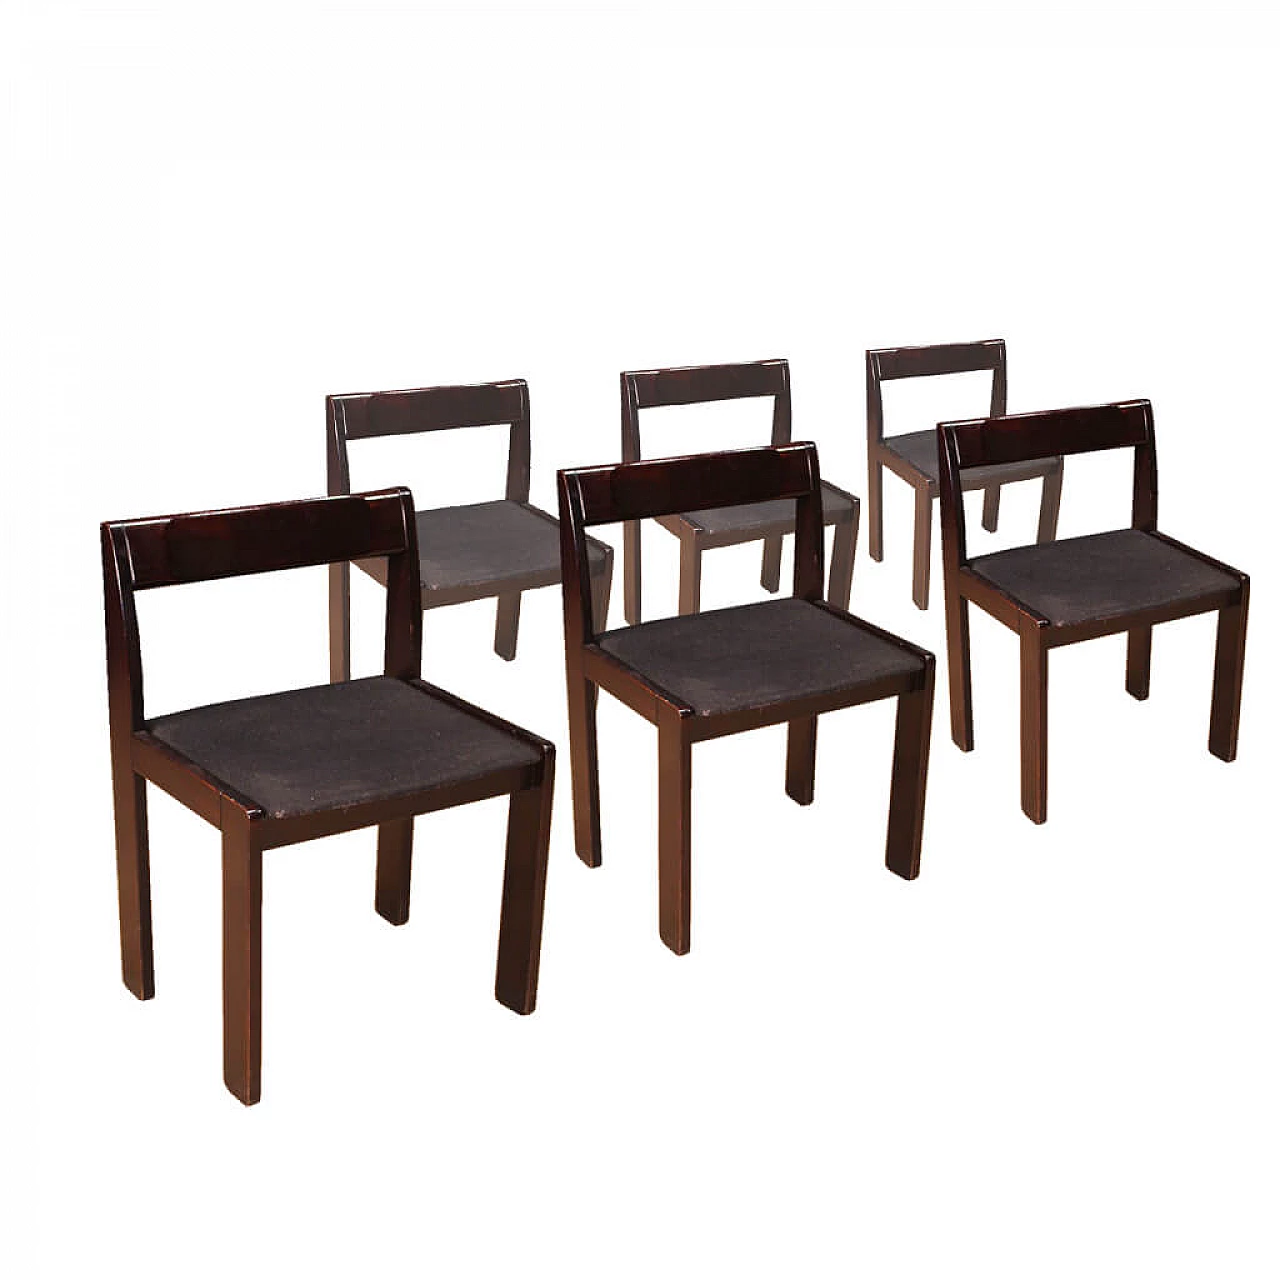 Six Italian designer chairs in mahogany wood 1064168